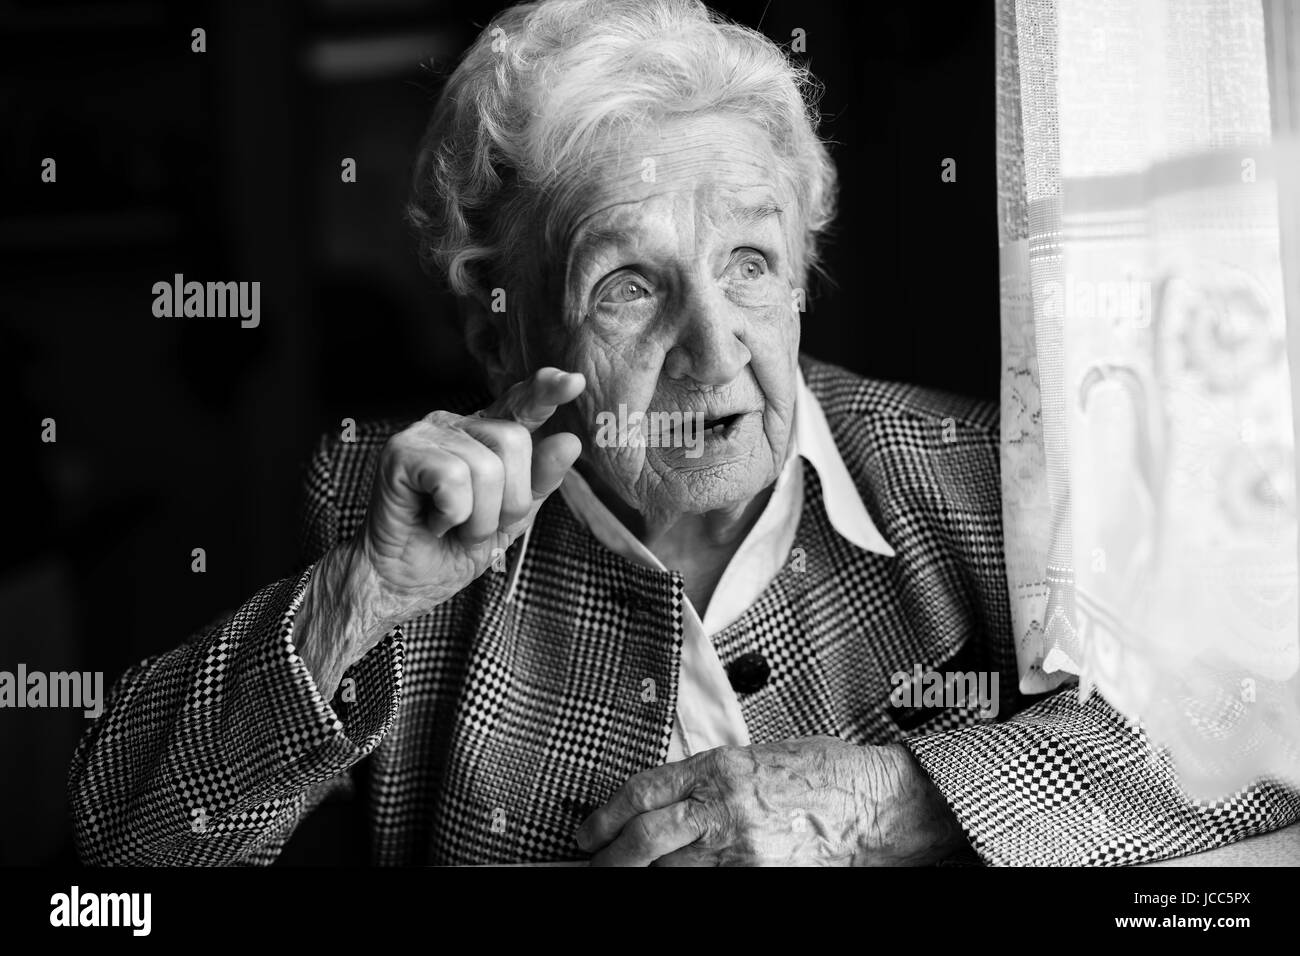 Portrait of an elderly women emotionally. Black-and-white photo. Stock Photo